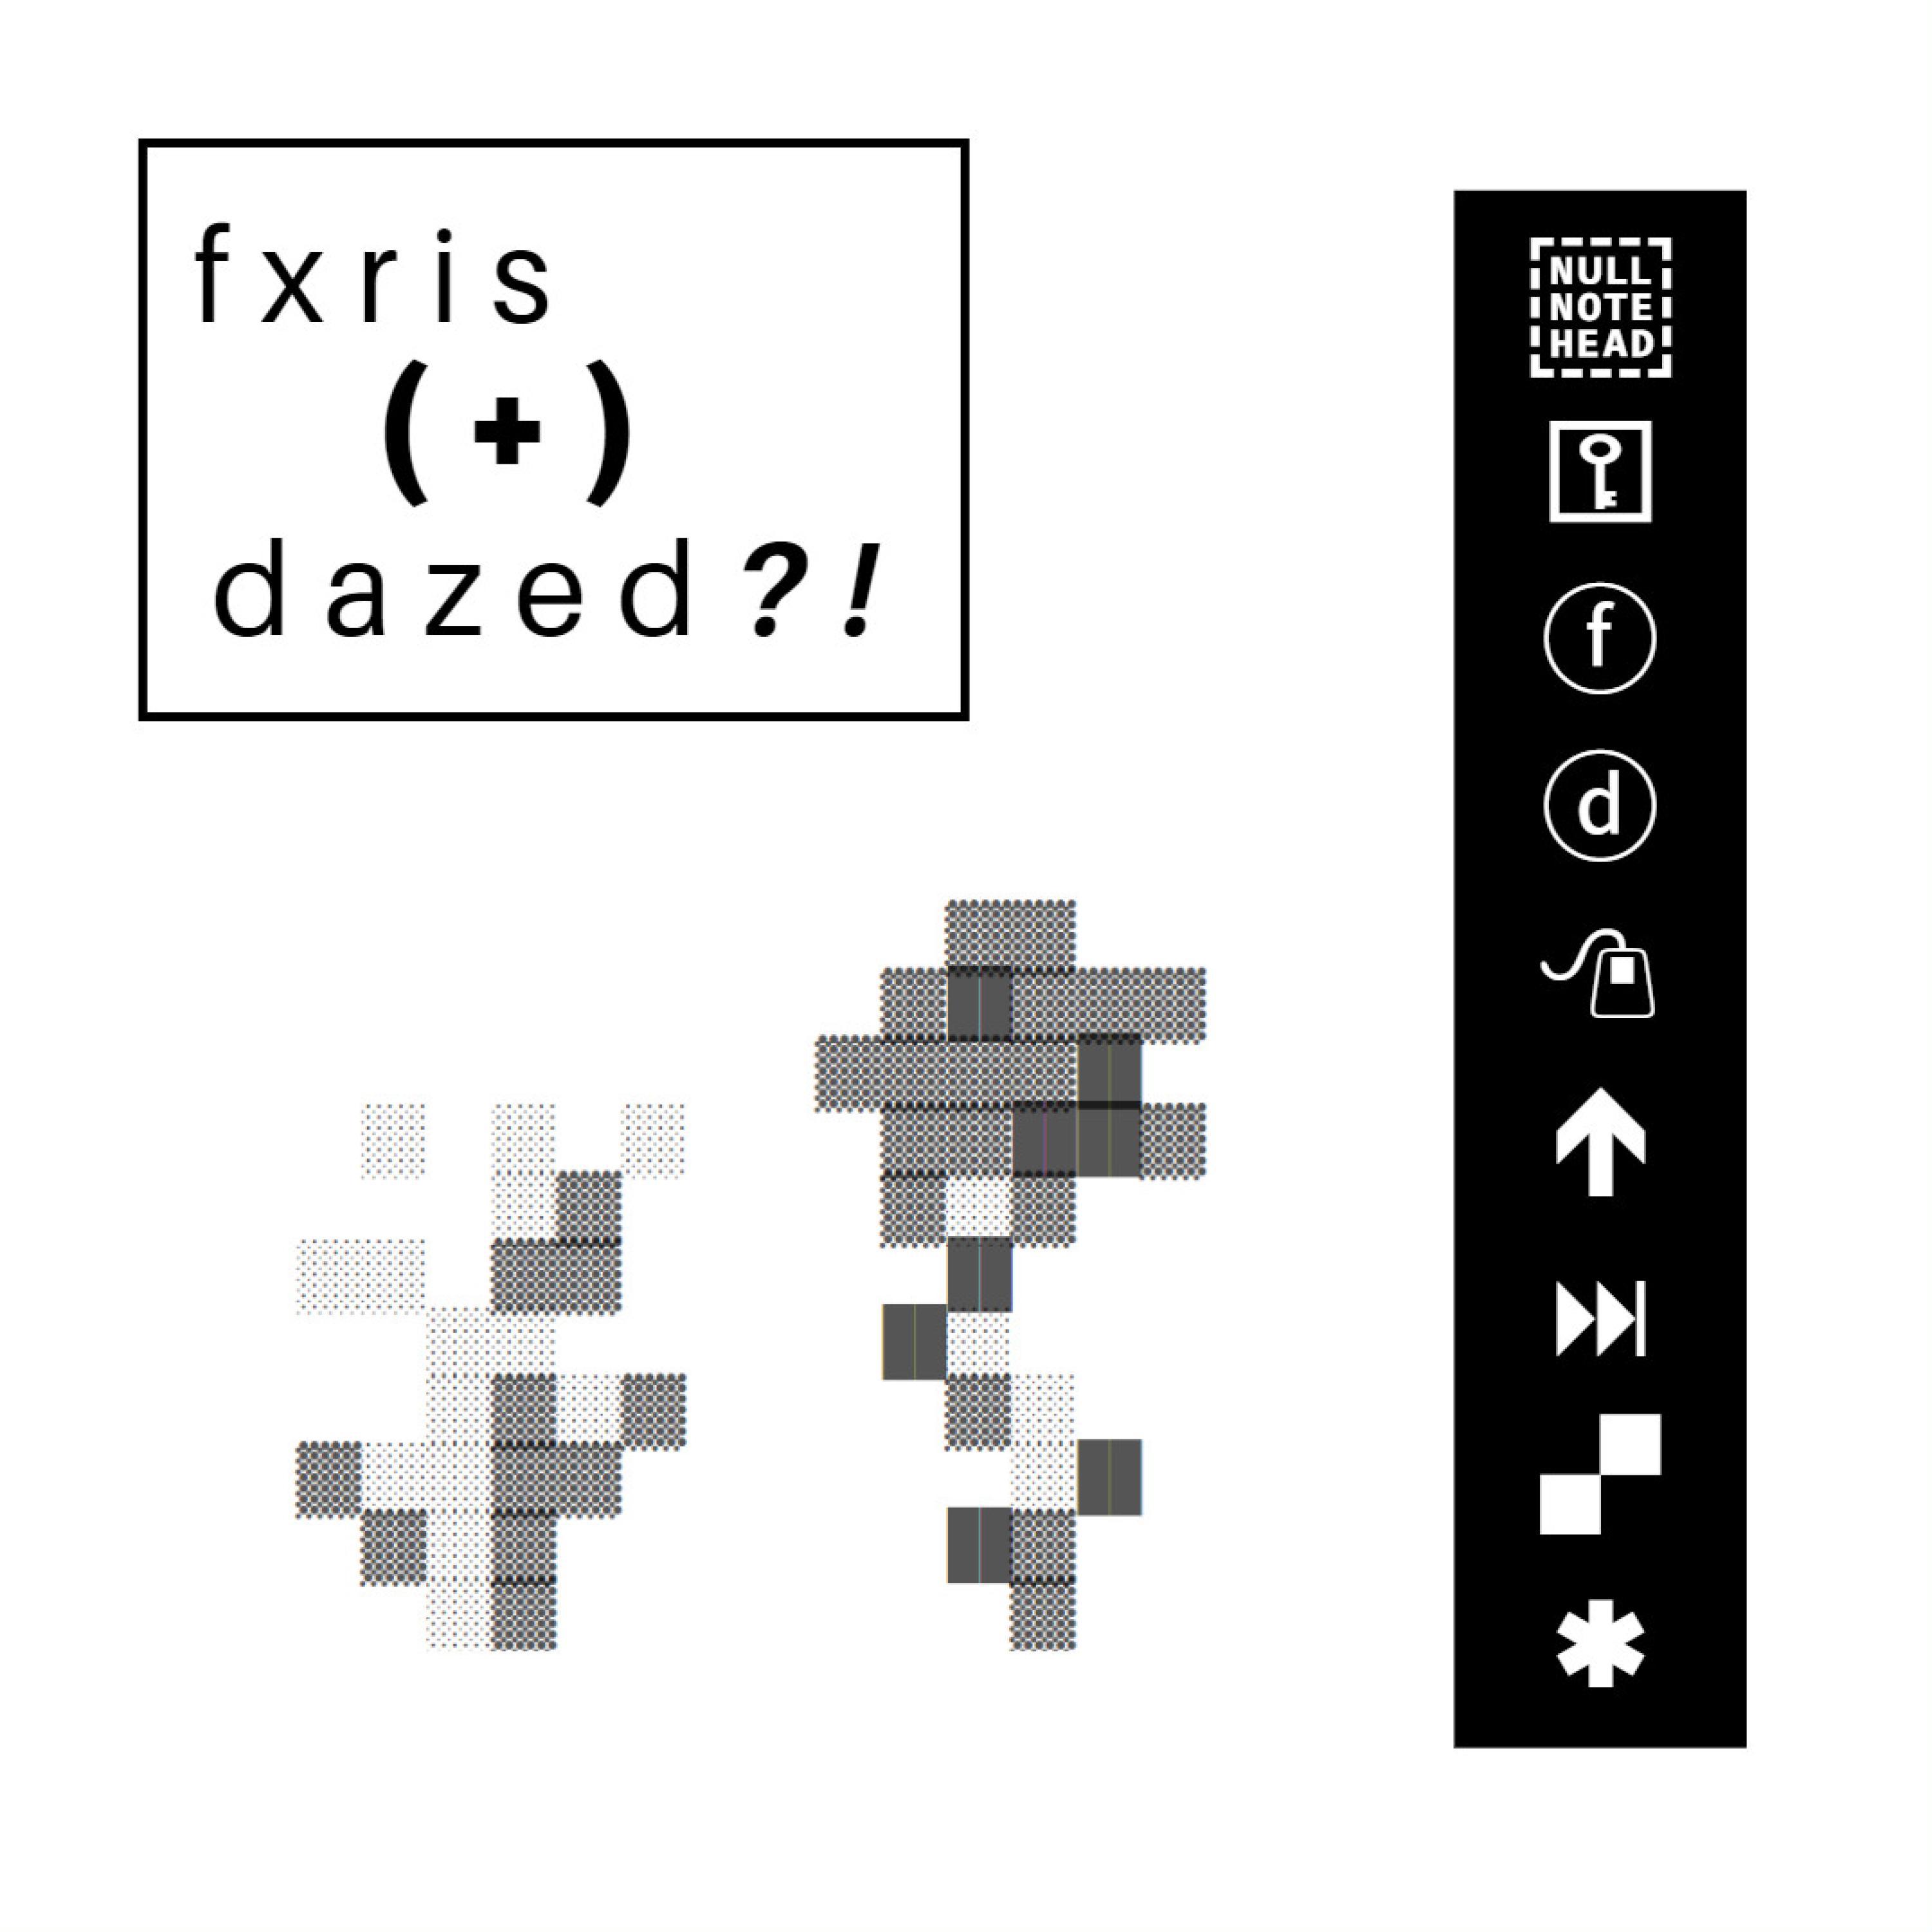 fxris - petals on the floor (feat. dazed?!)